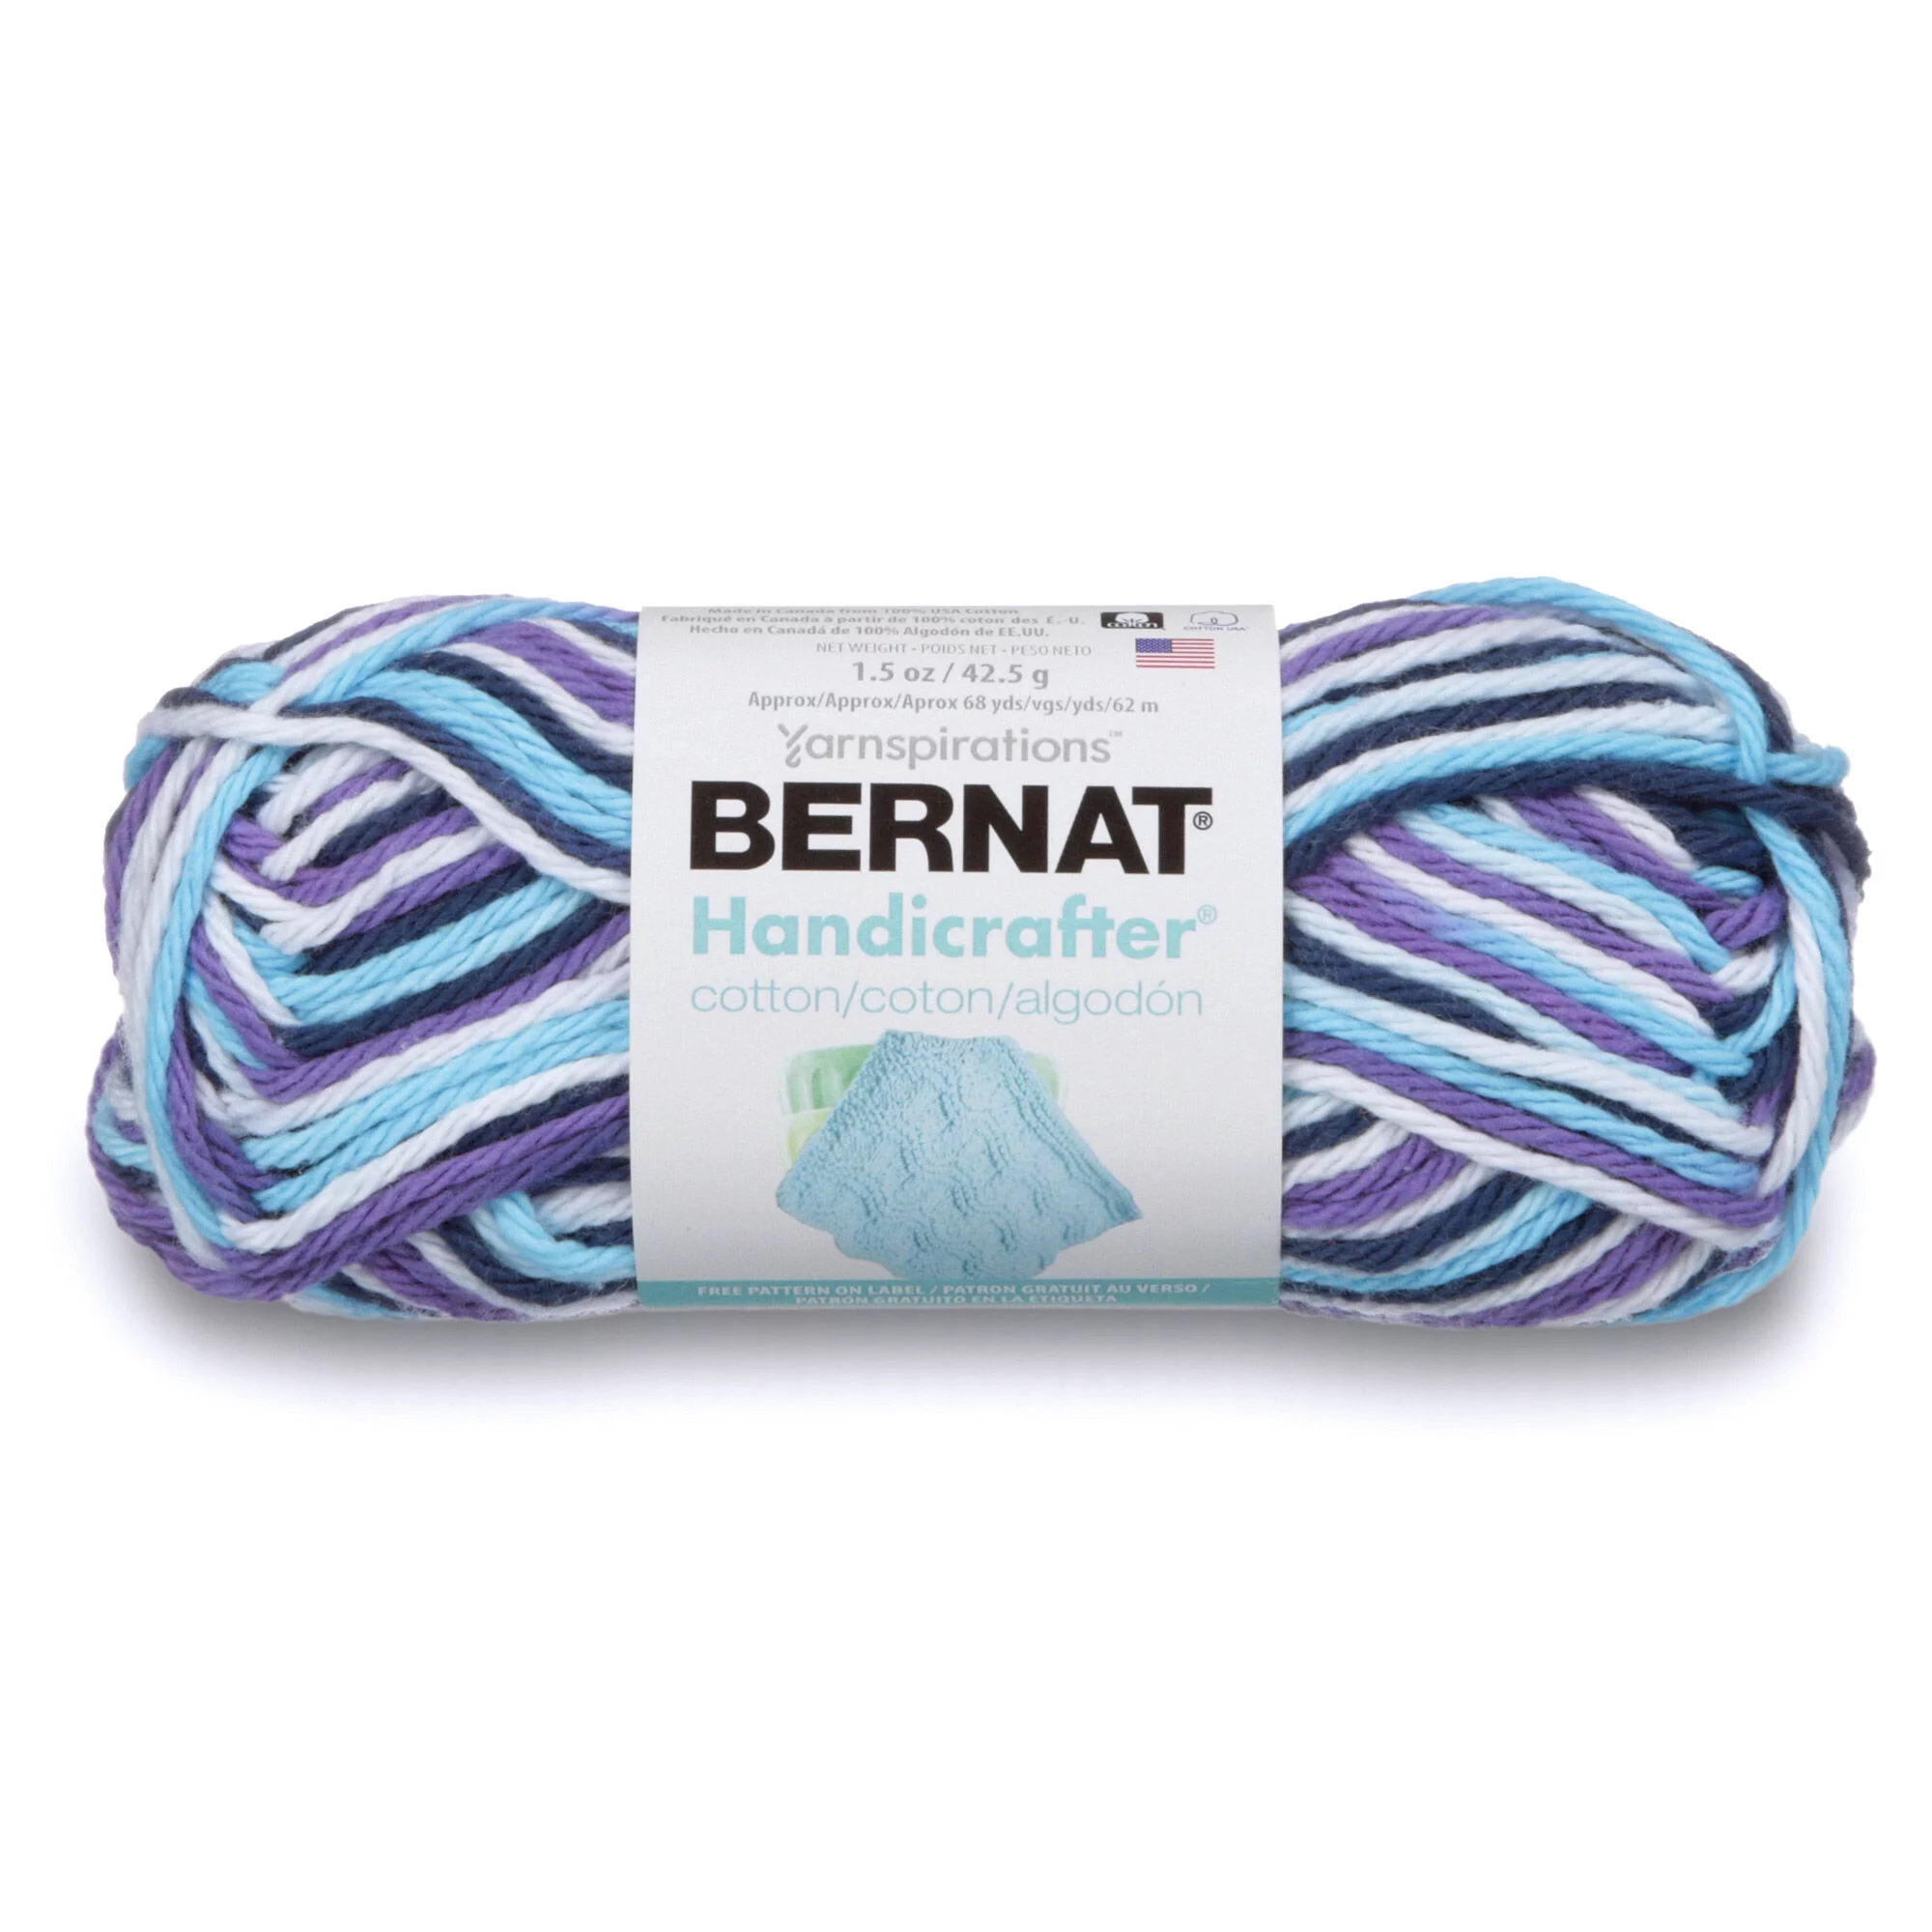 Bernat Handicrafter Cotton Yarn, 1.5 Oz, Moondance